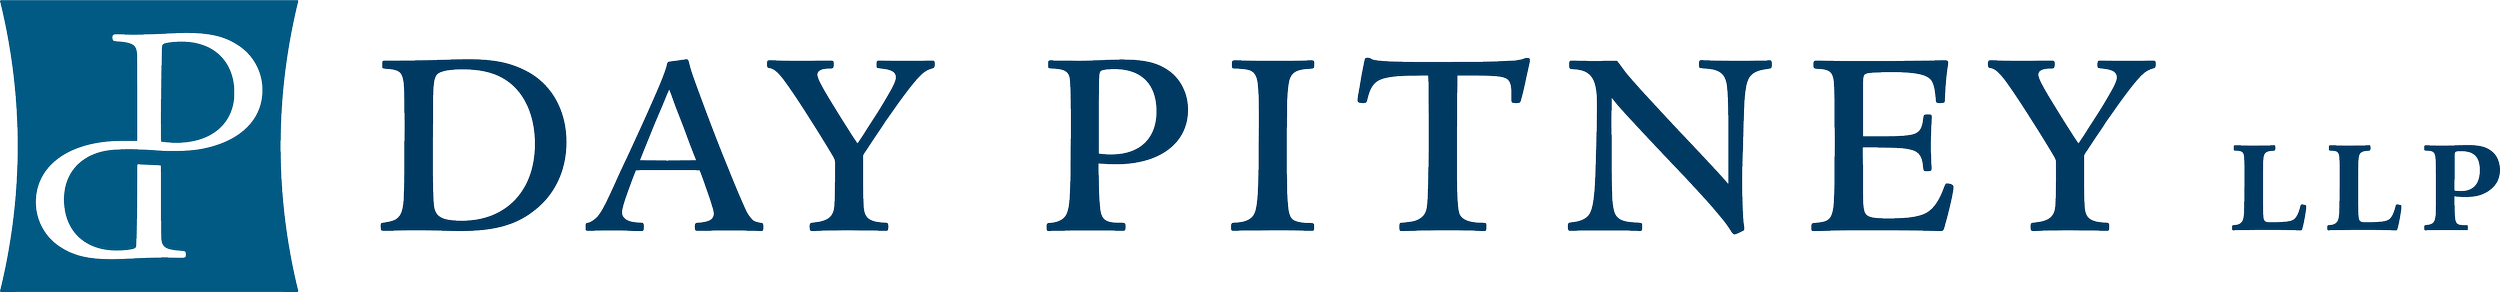 Day Pitney logo_RGB-300dpi-PNG.png